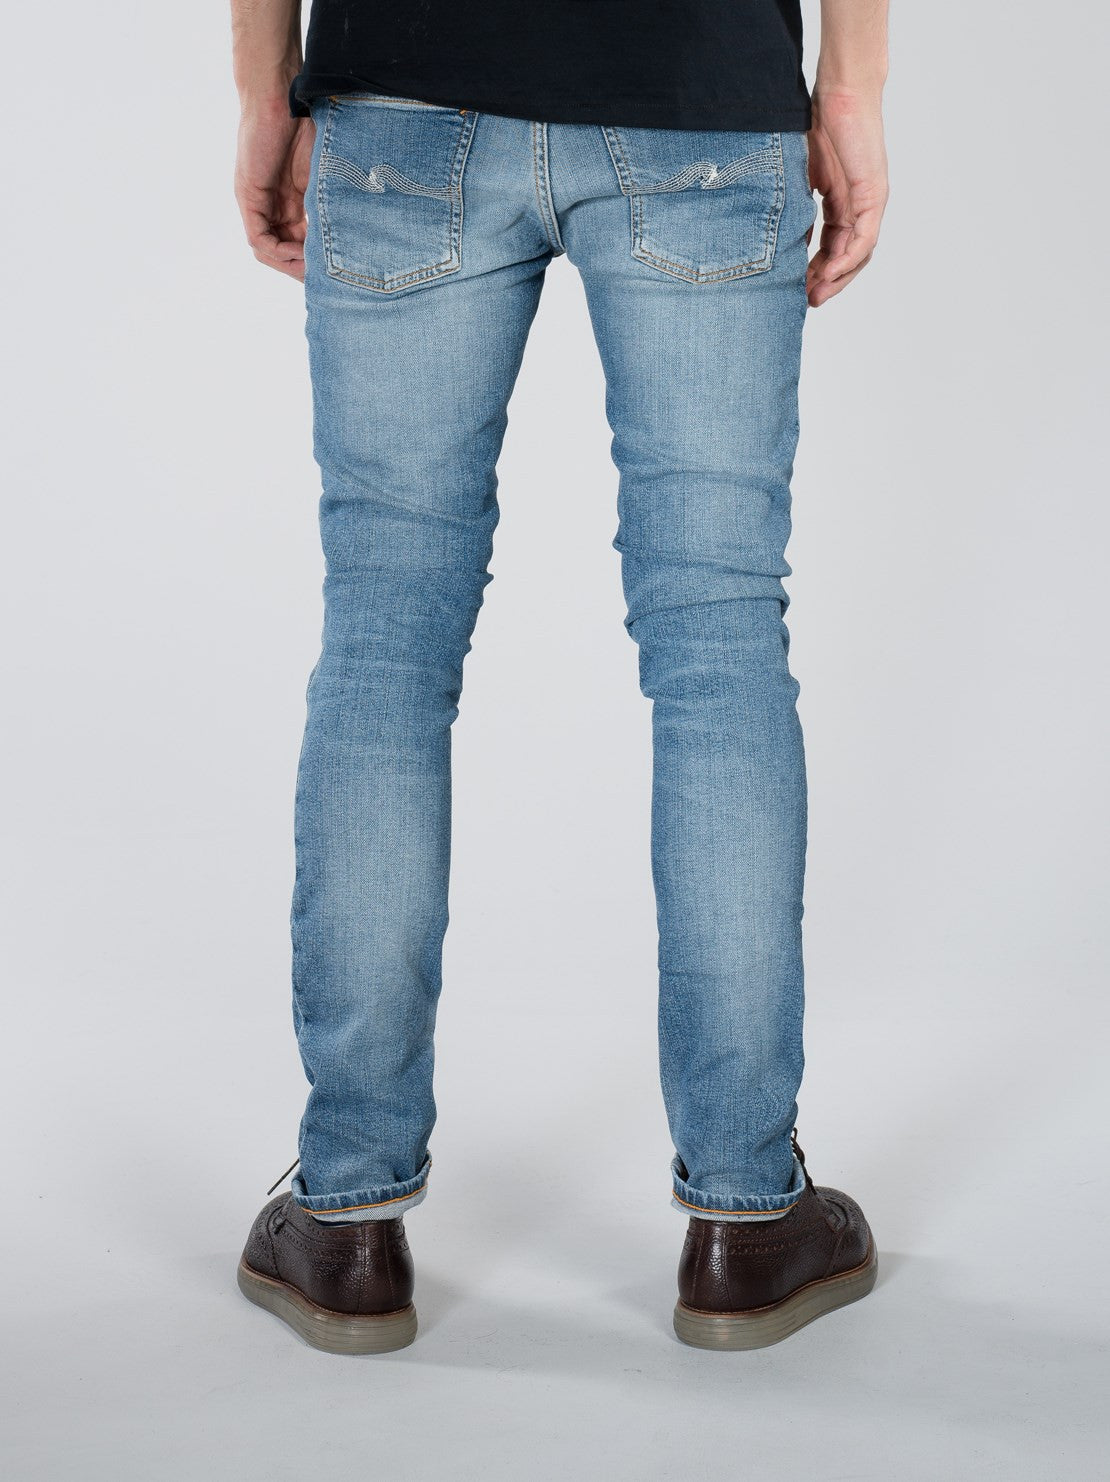 Nudie Jeans Tight Long John Stian Replicar